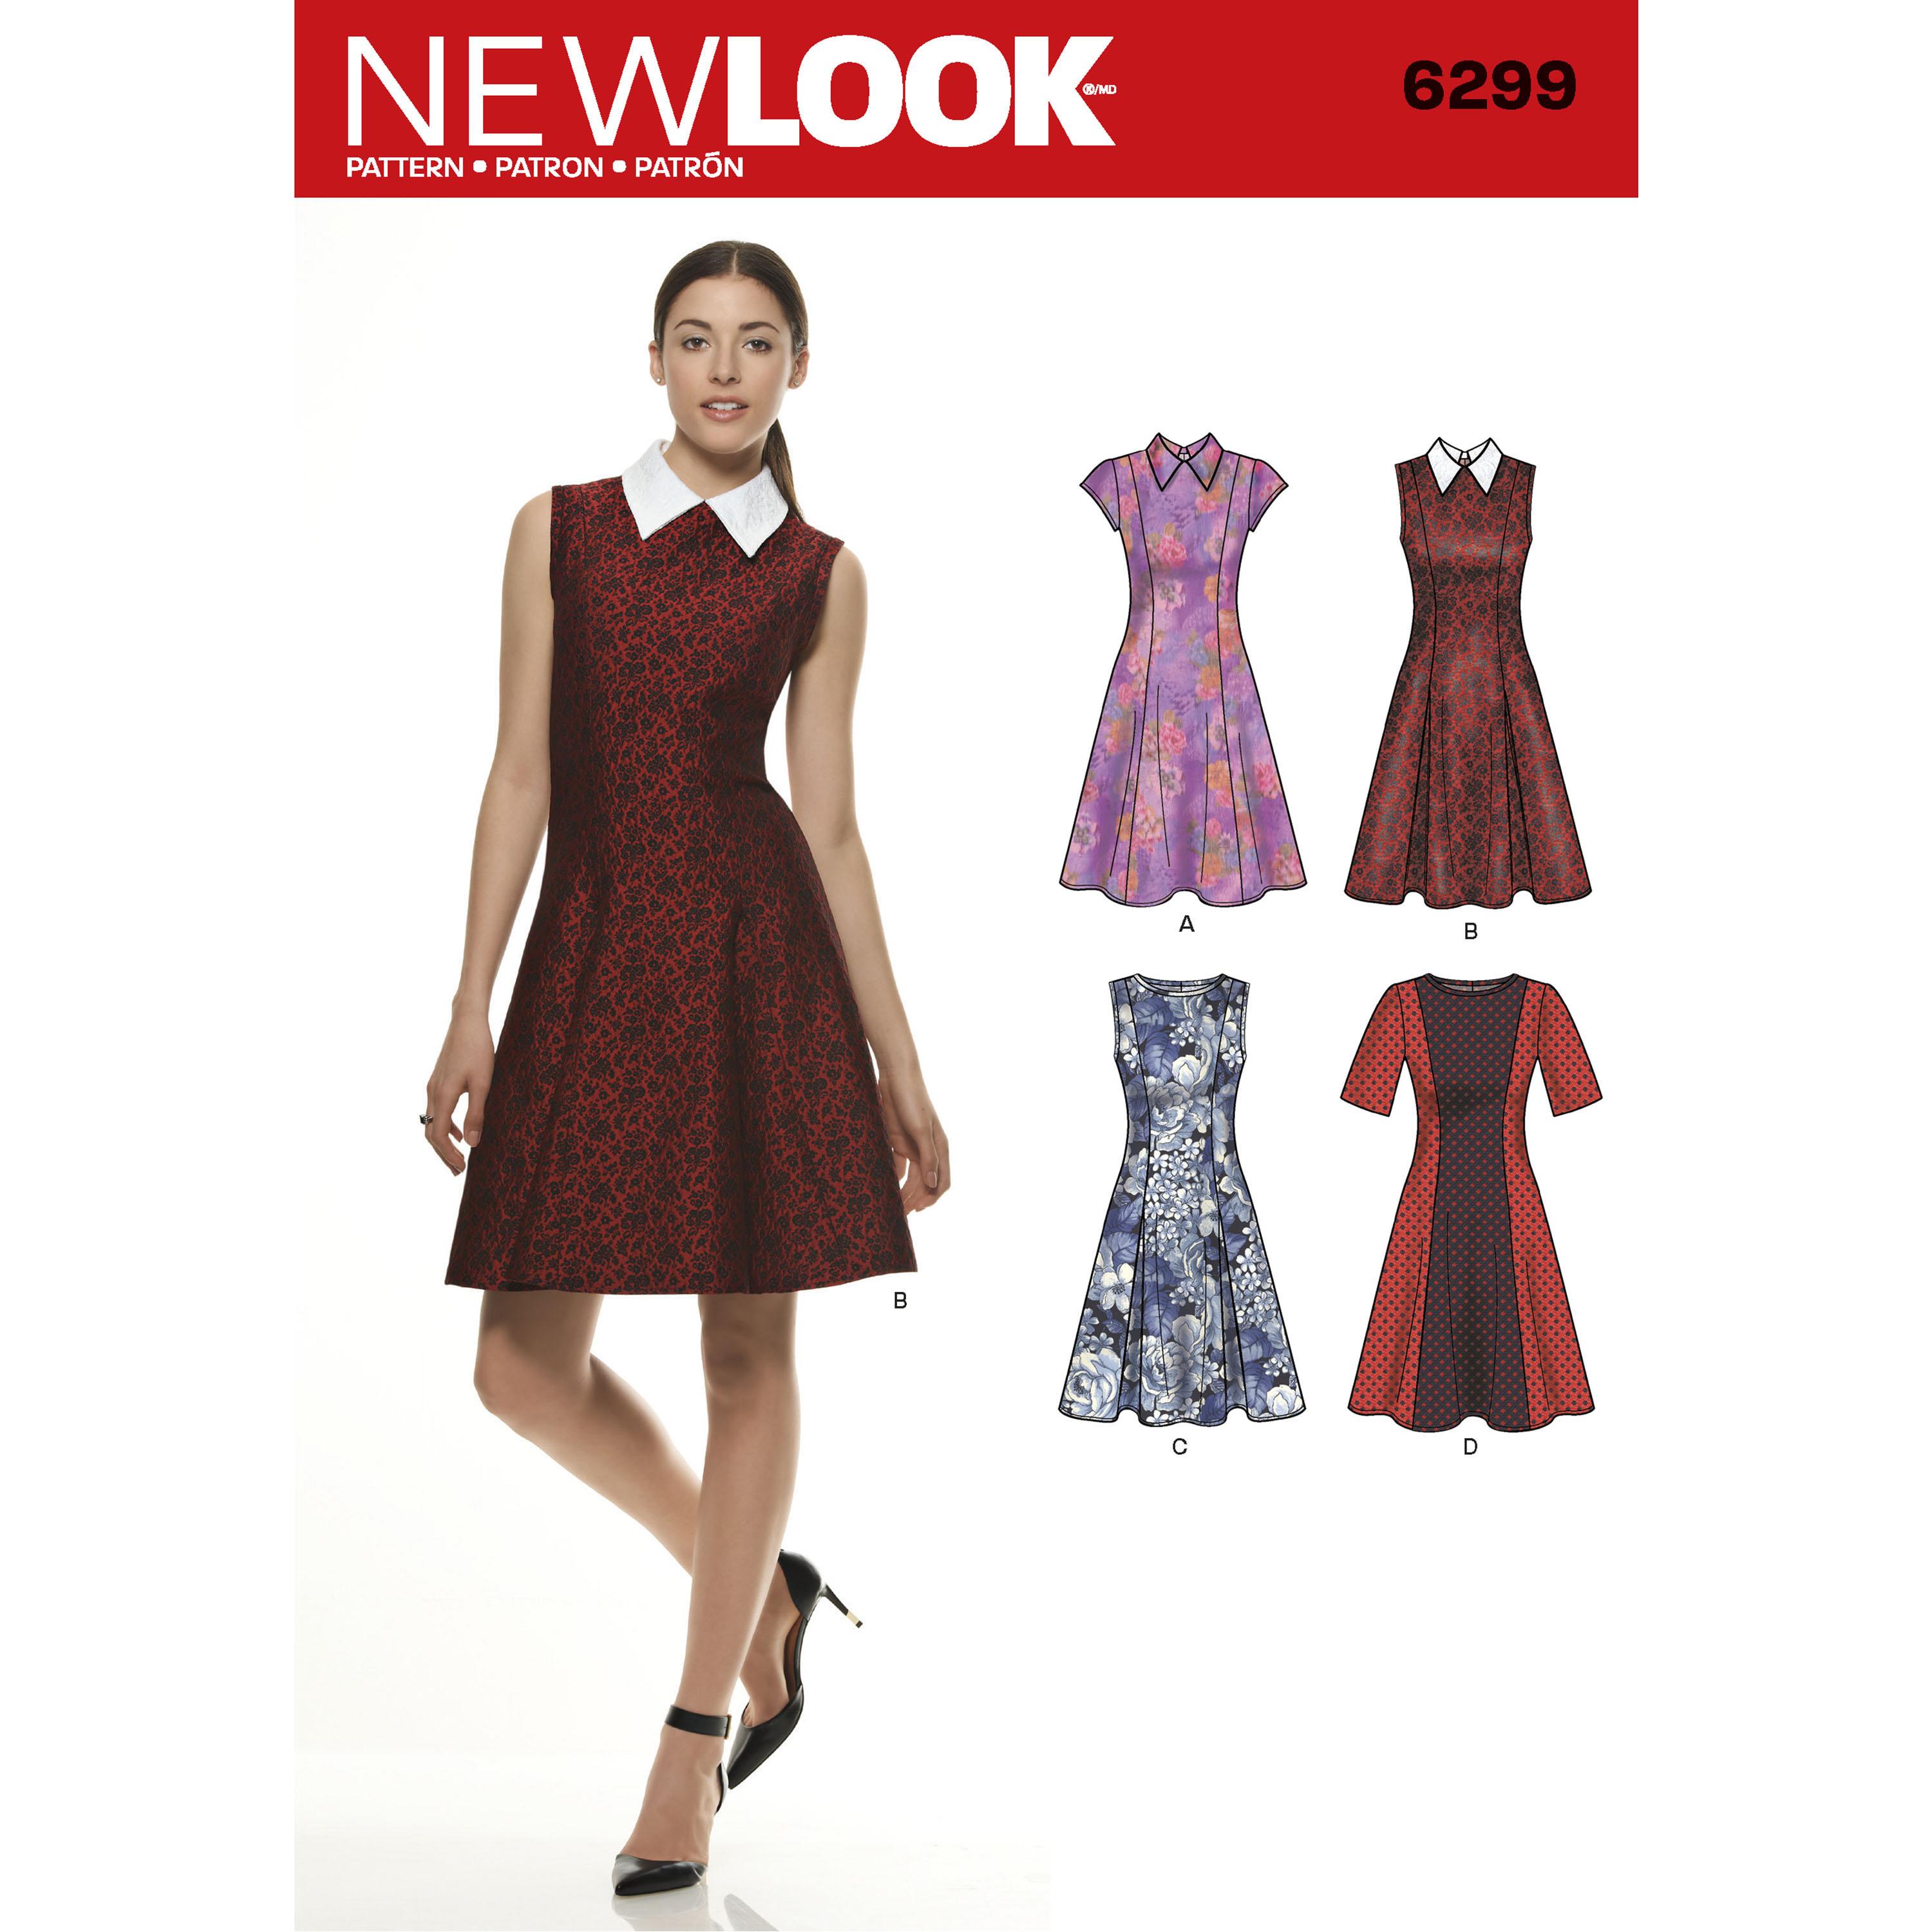 NewLook N6299 Misses' Dress with Neckline & Sleeve Variations